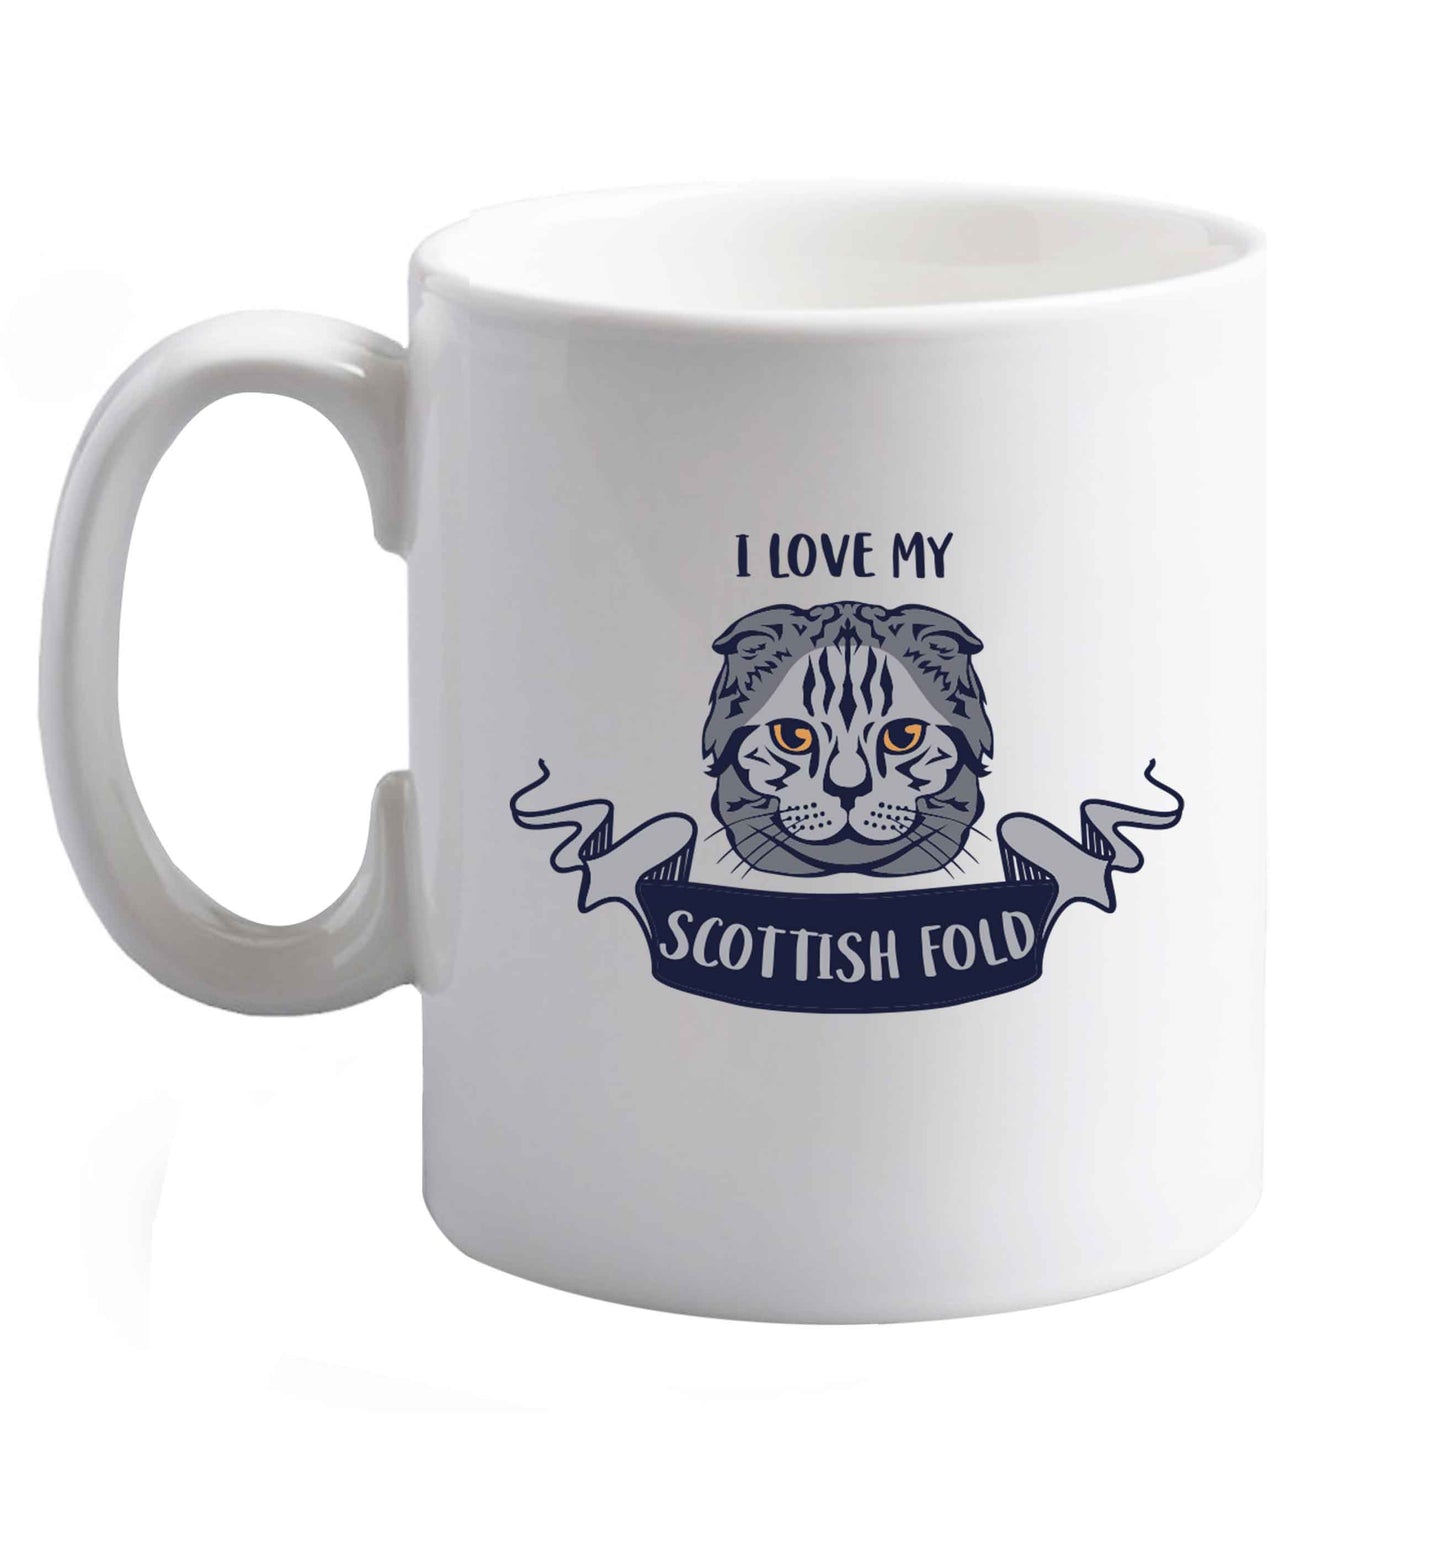 10 oz I love my scottish fold cat ceramic mug right handed